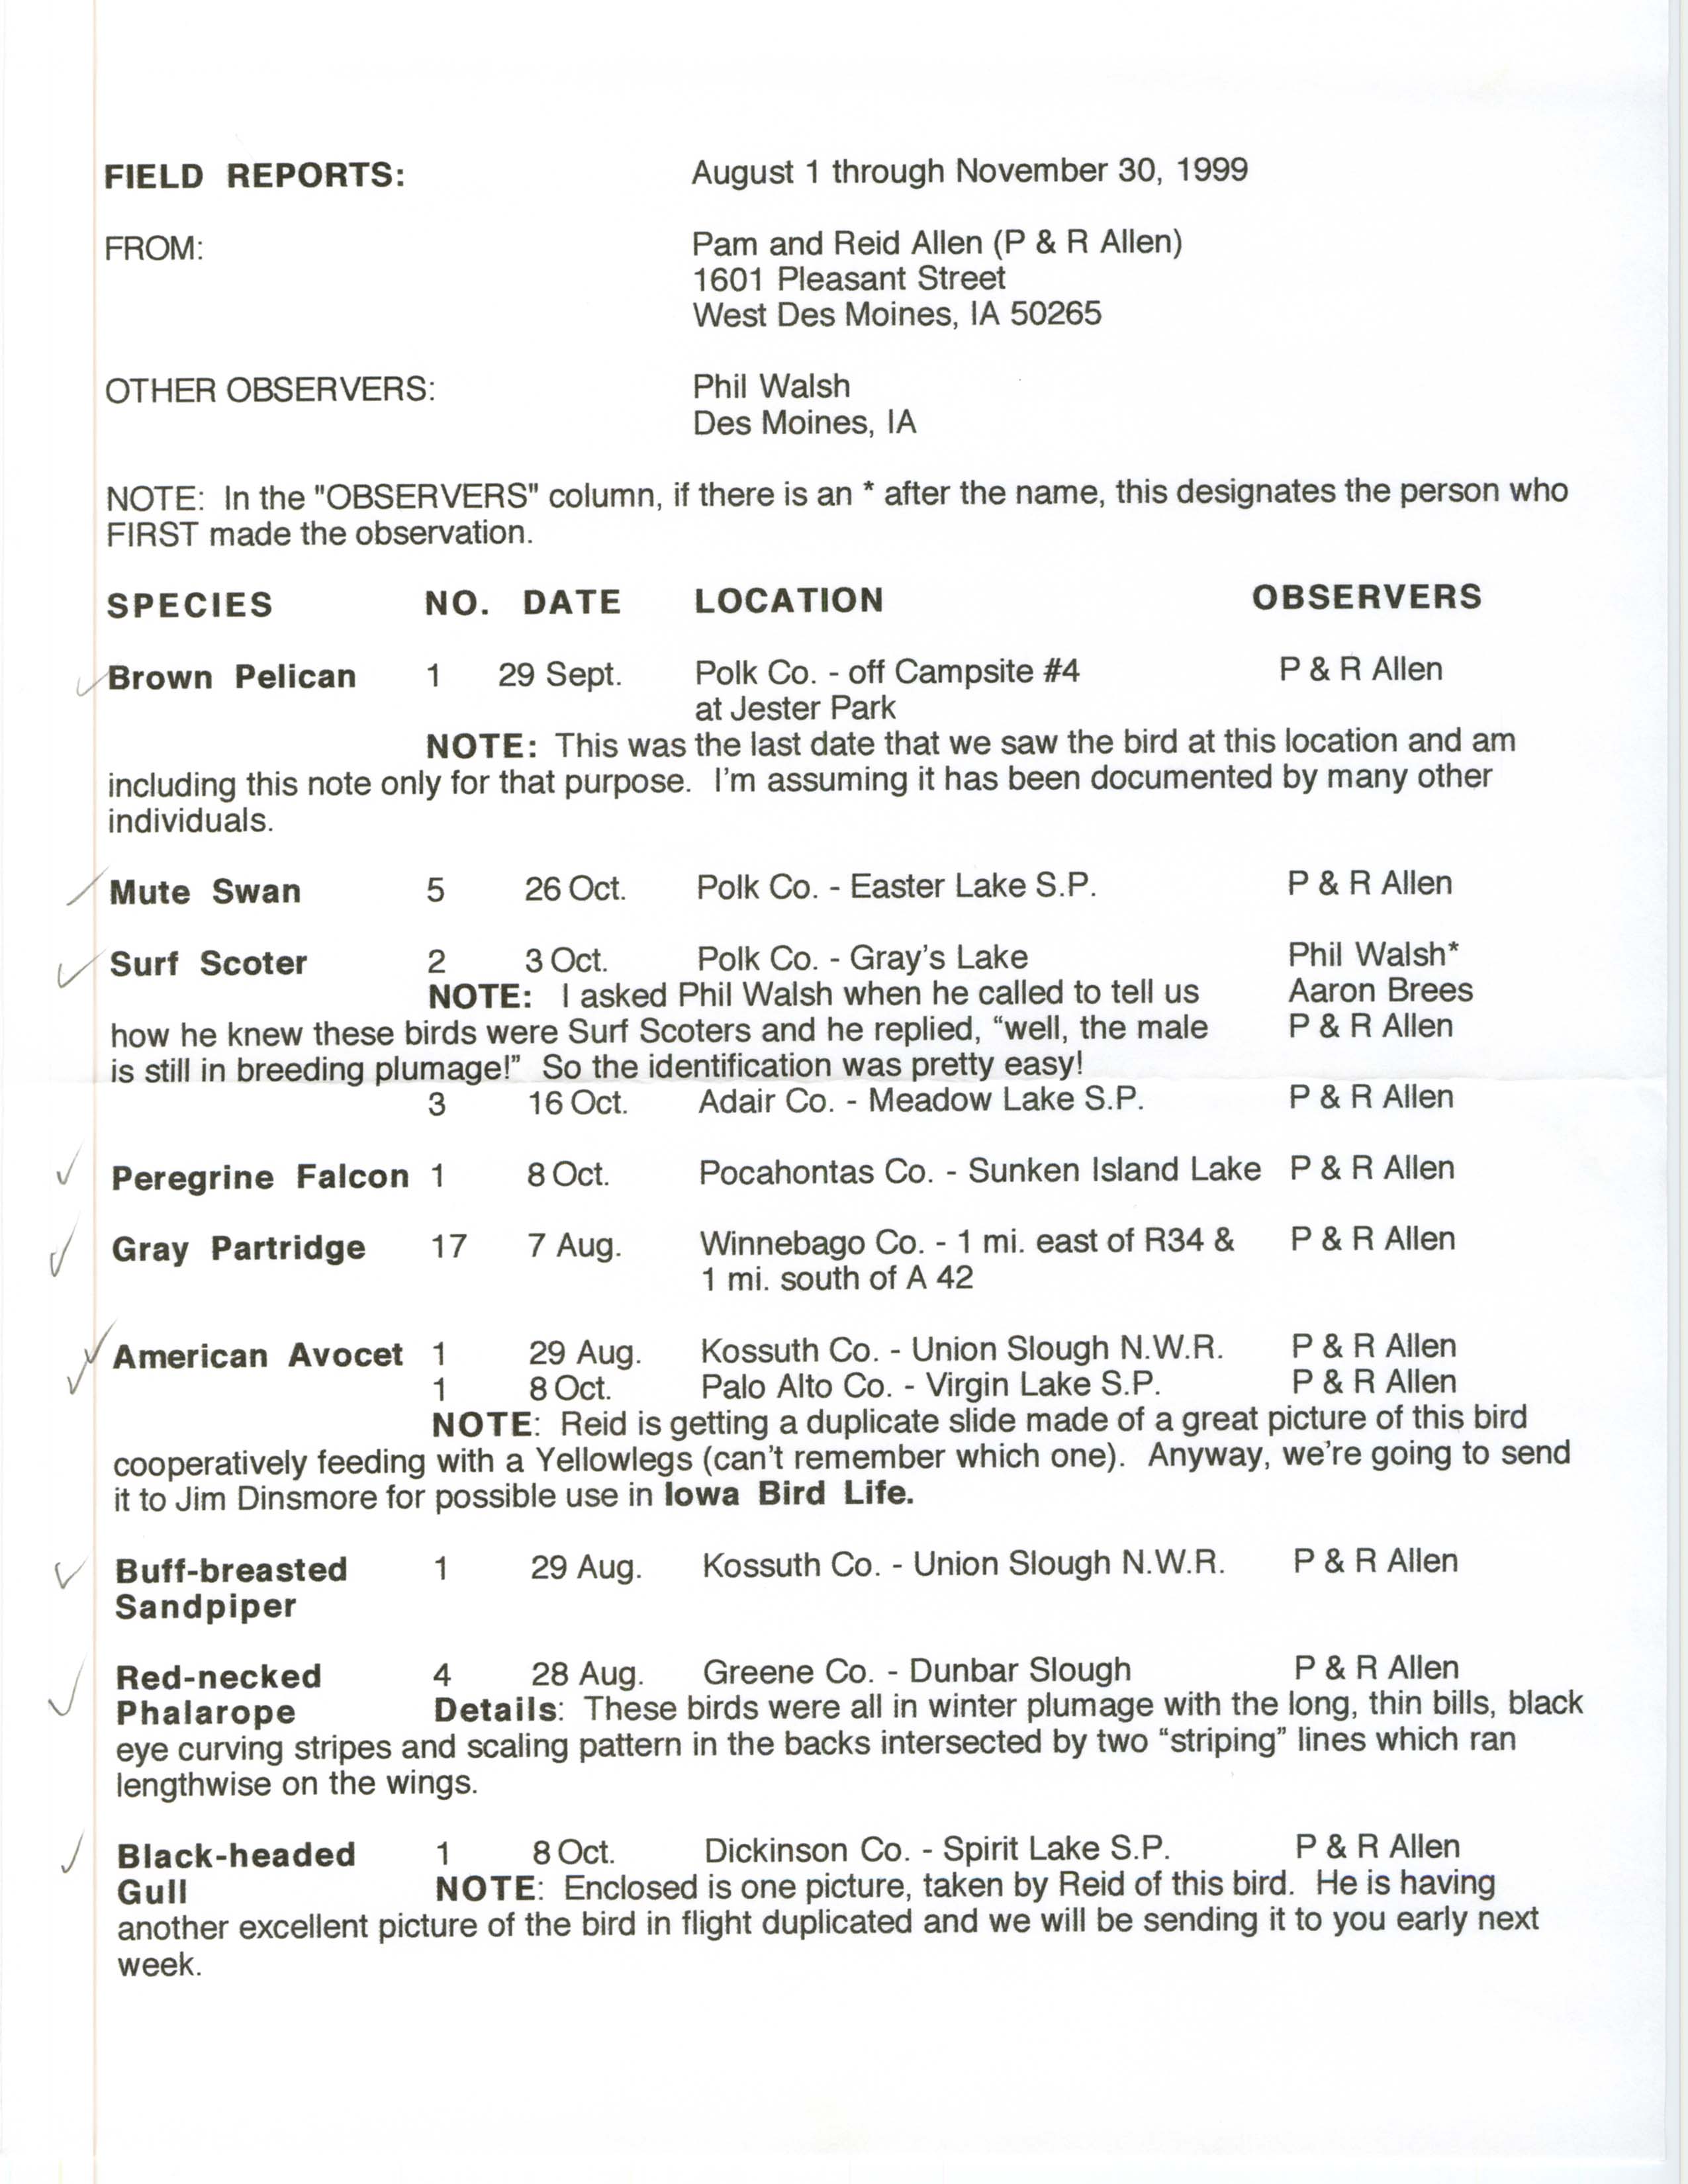 Field reports, August 1 through November 30, 1999, Pam and Reid Allen